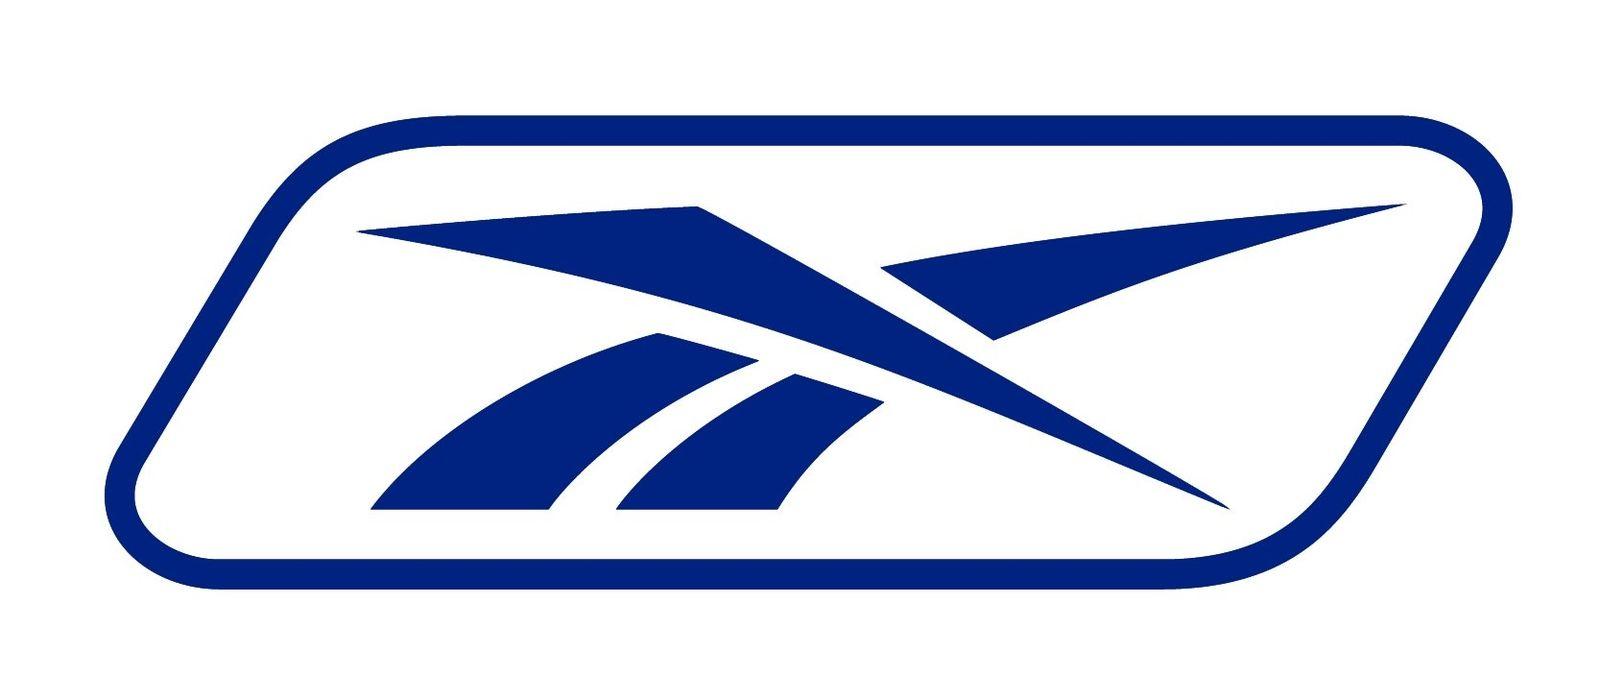 W an X Logo - Blue Logos